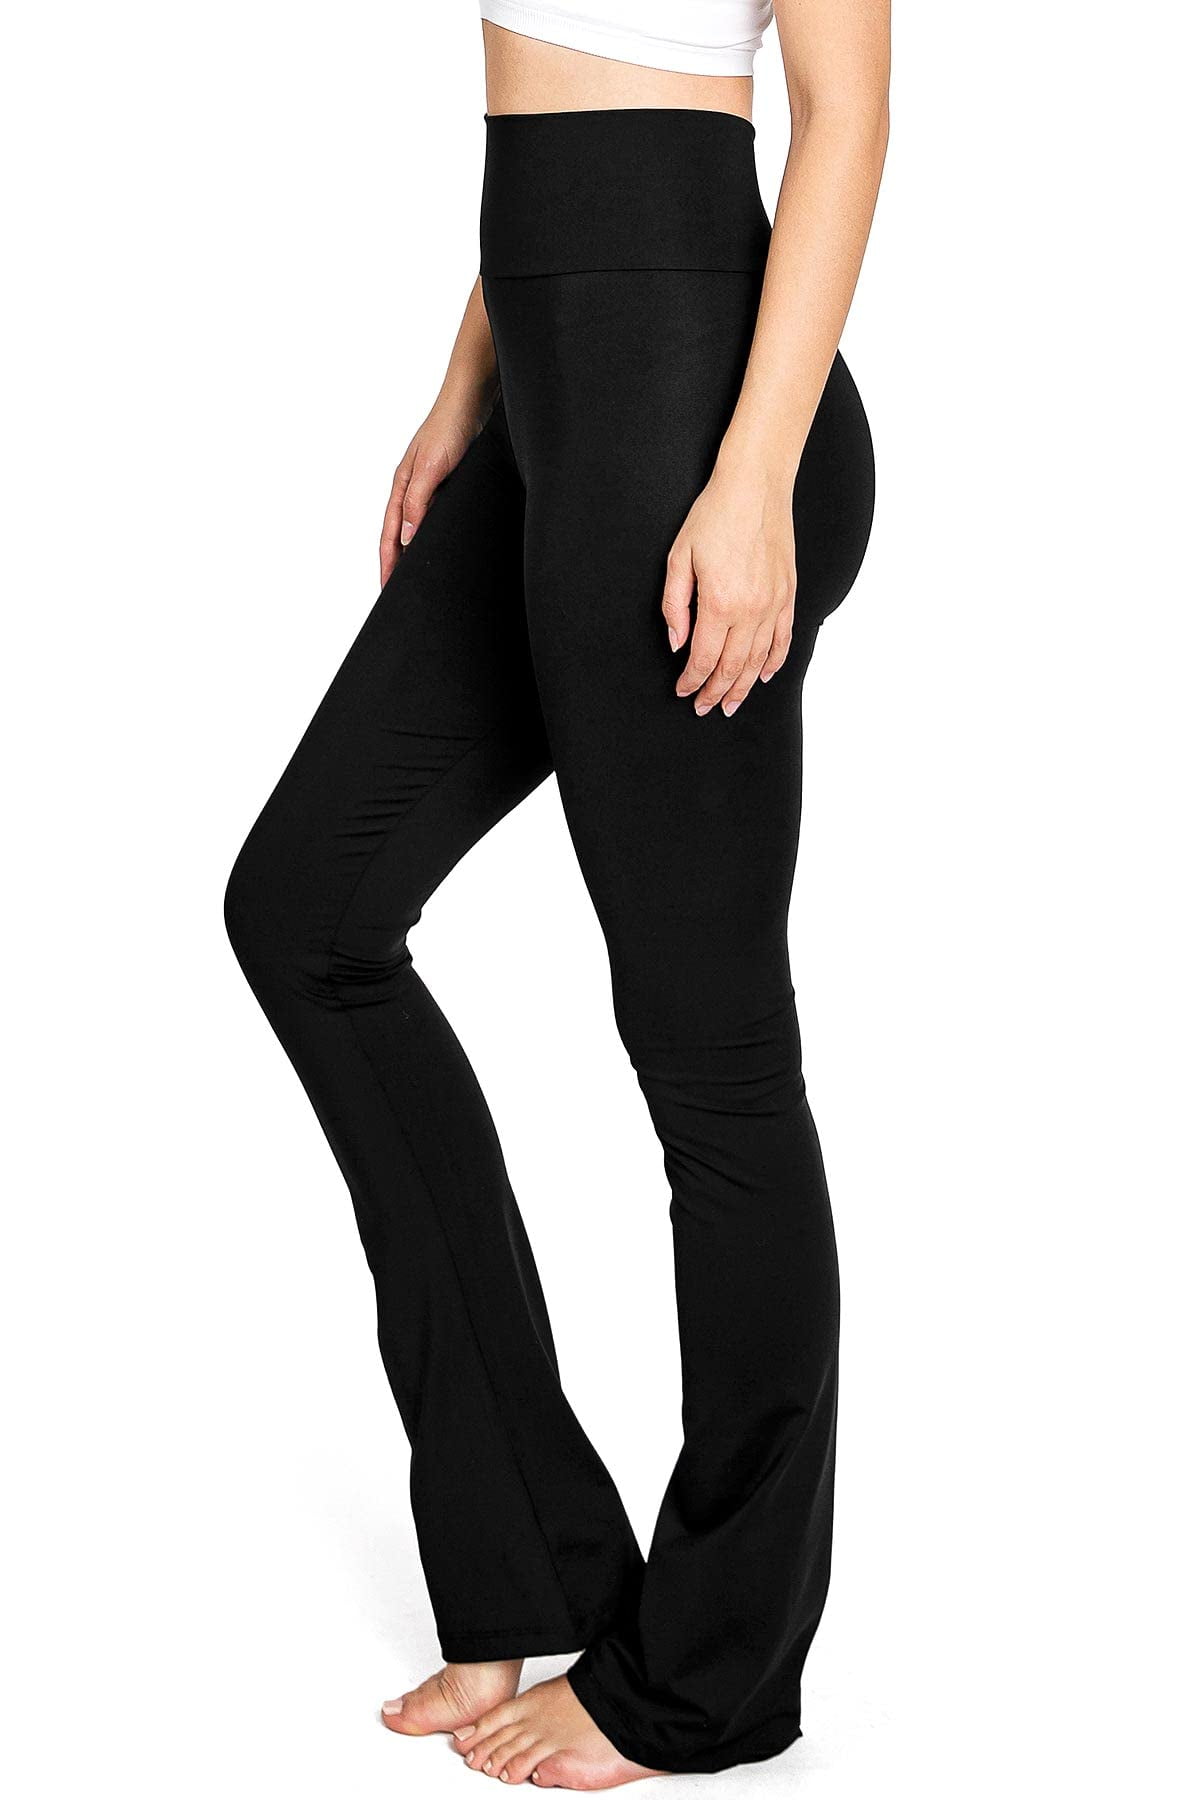 Aggregate 240+ black bootcut leggings